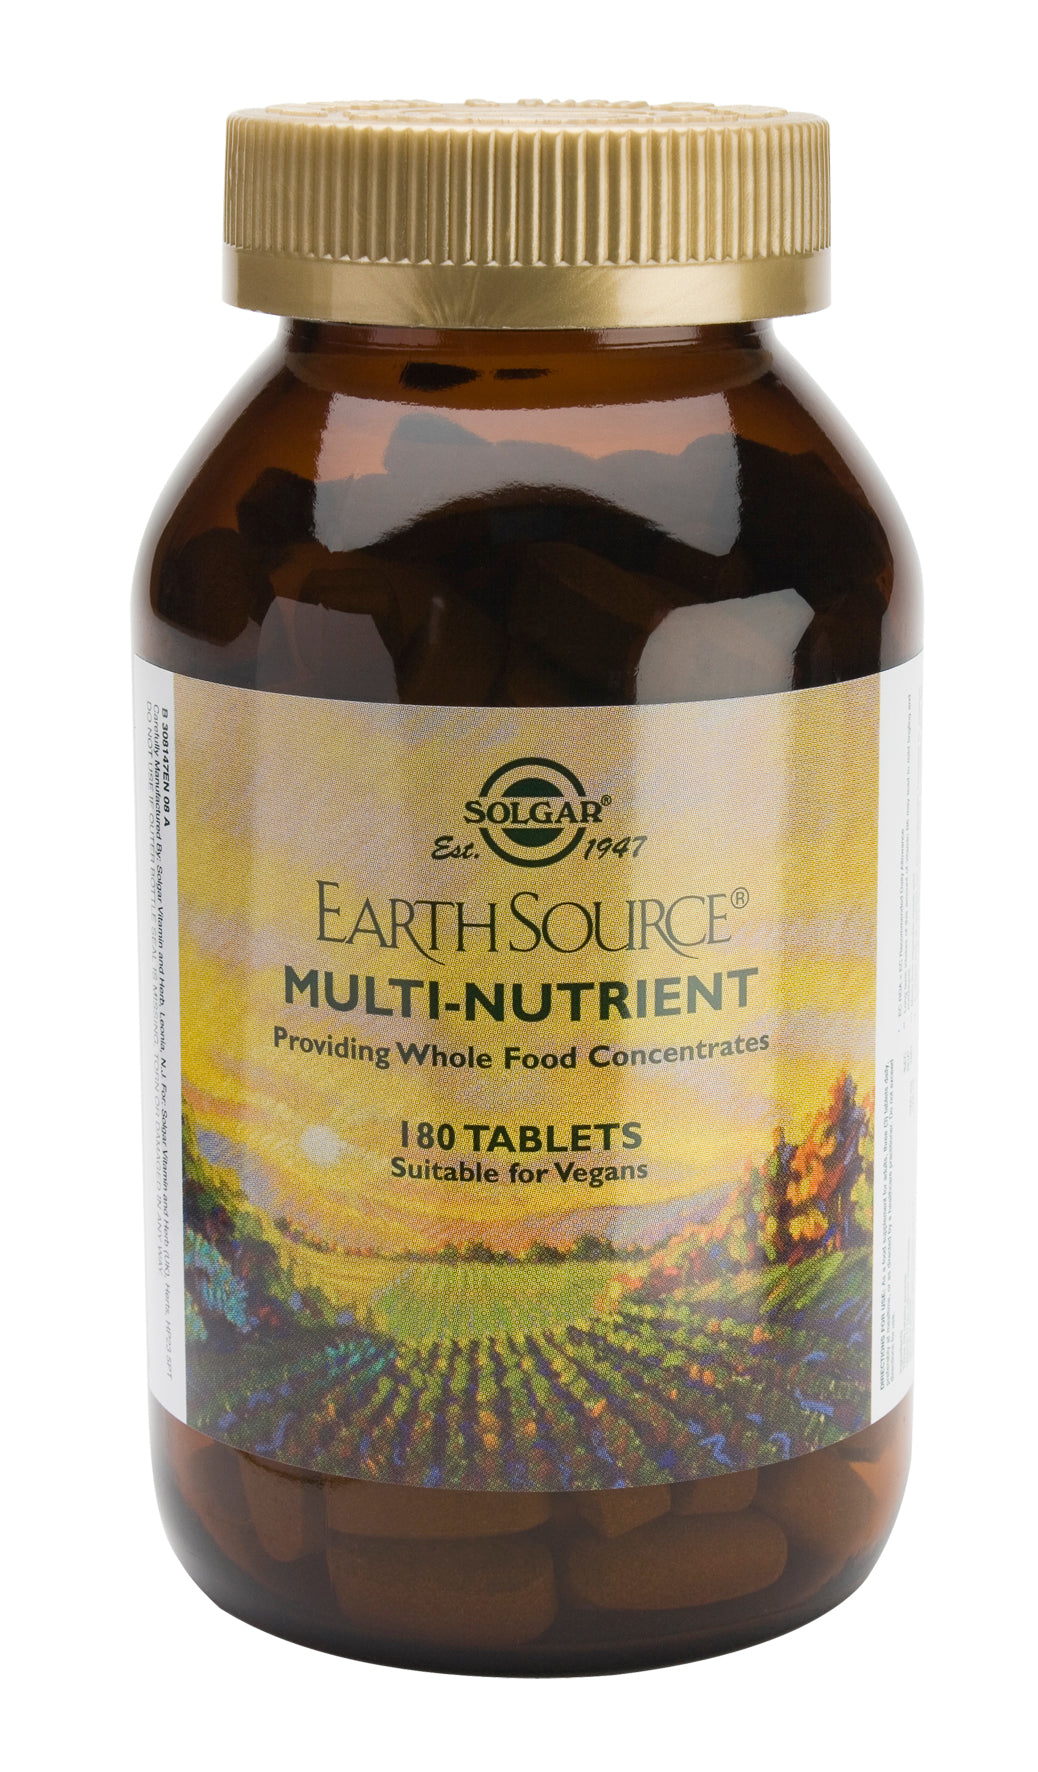 Solgar Earth Source Multi-Nutrient